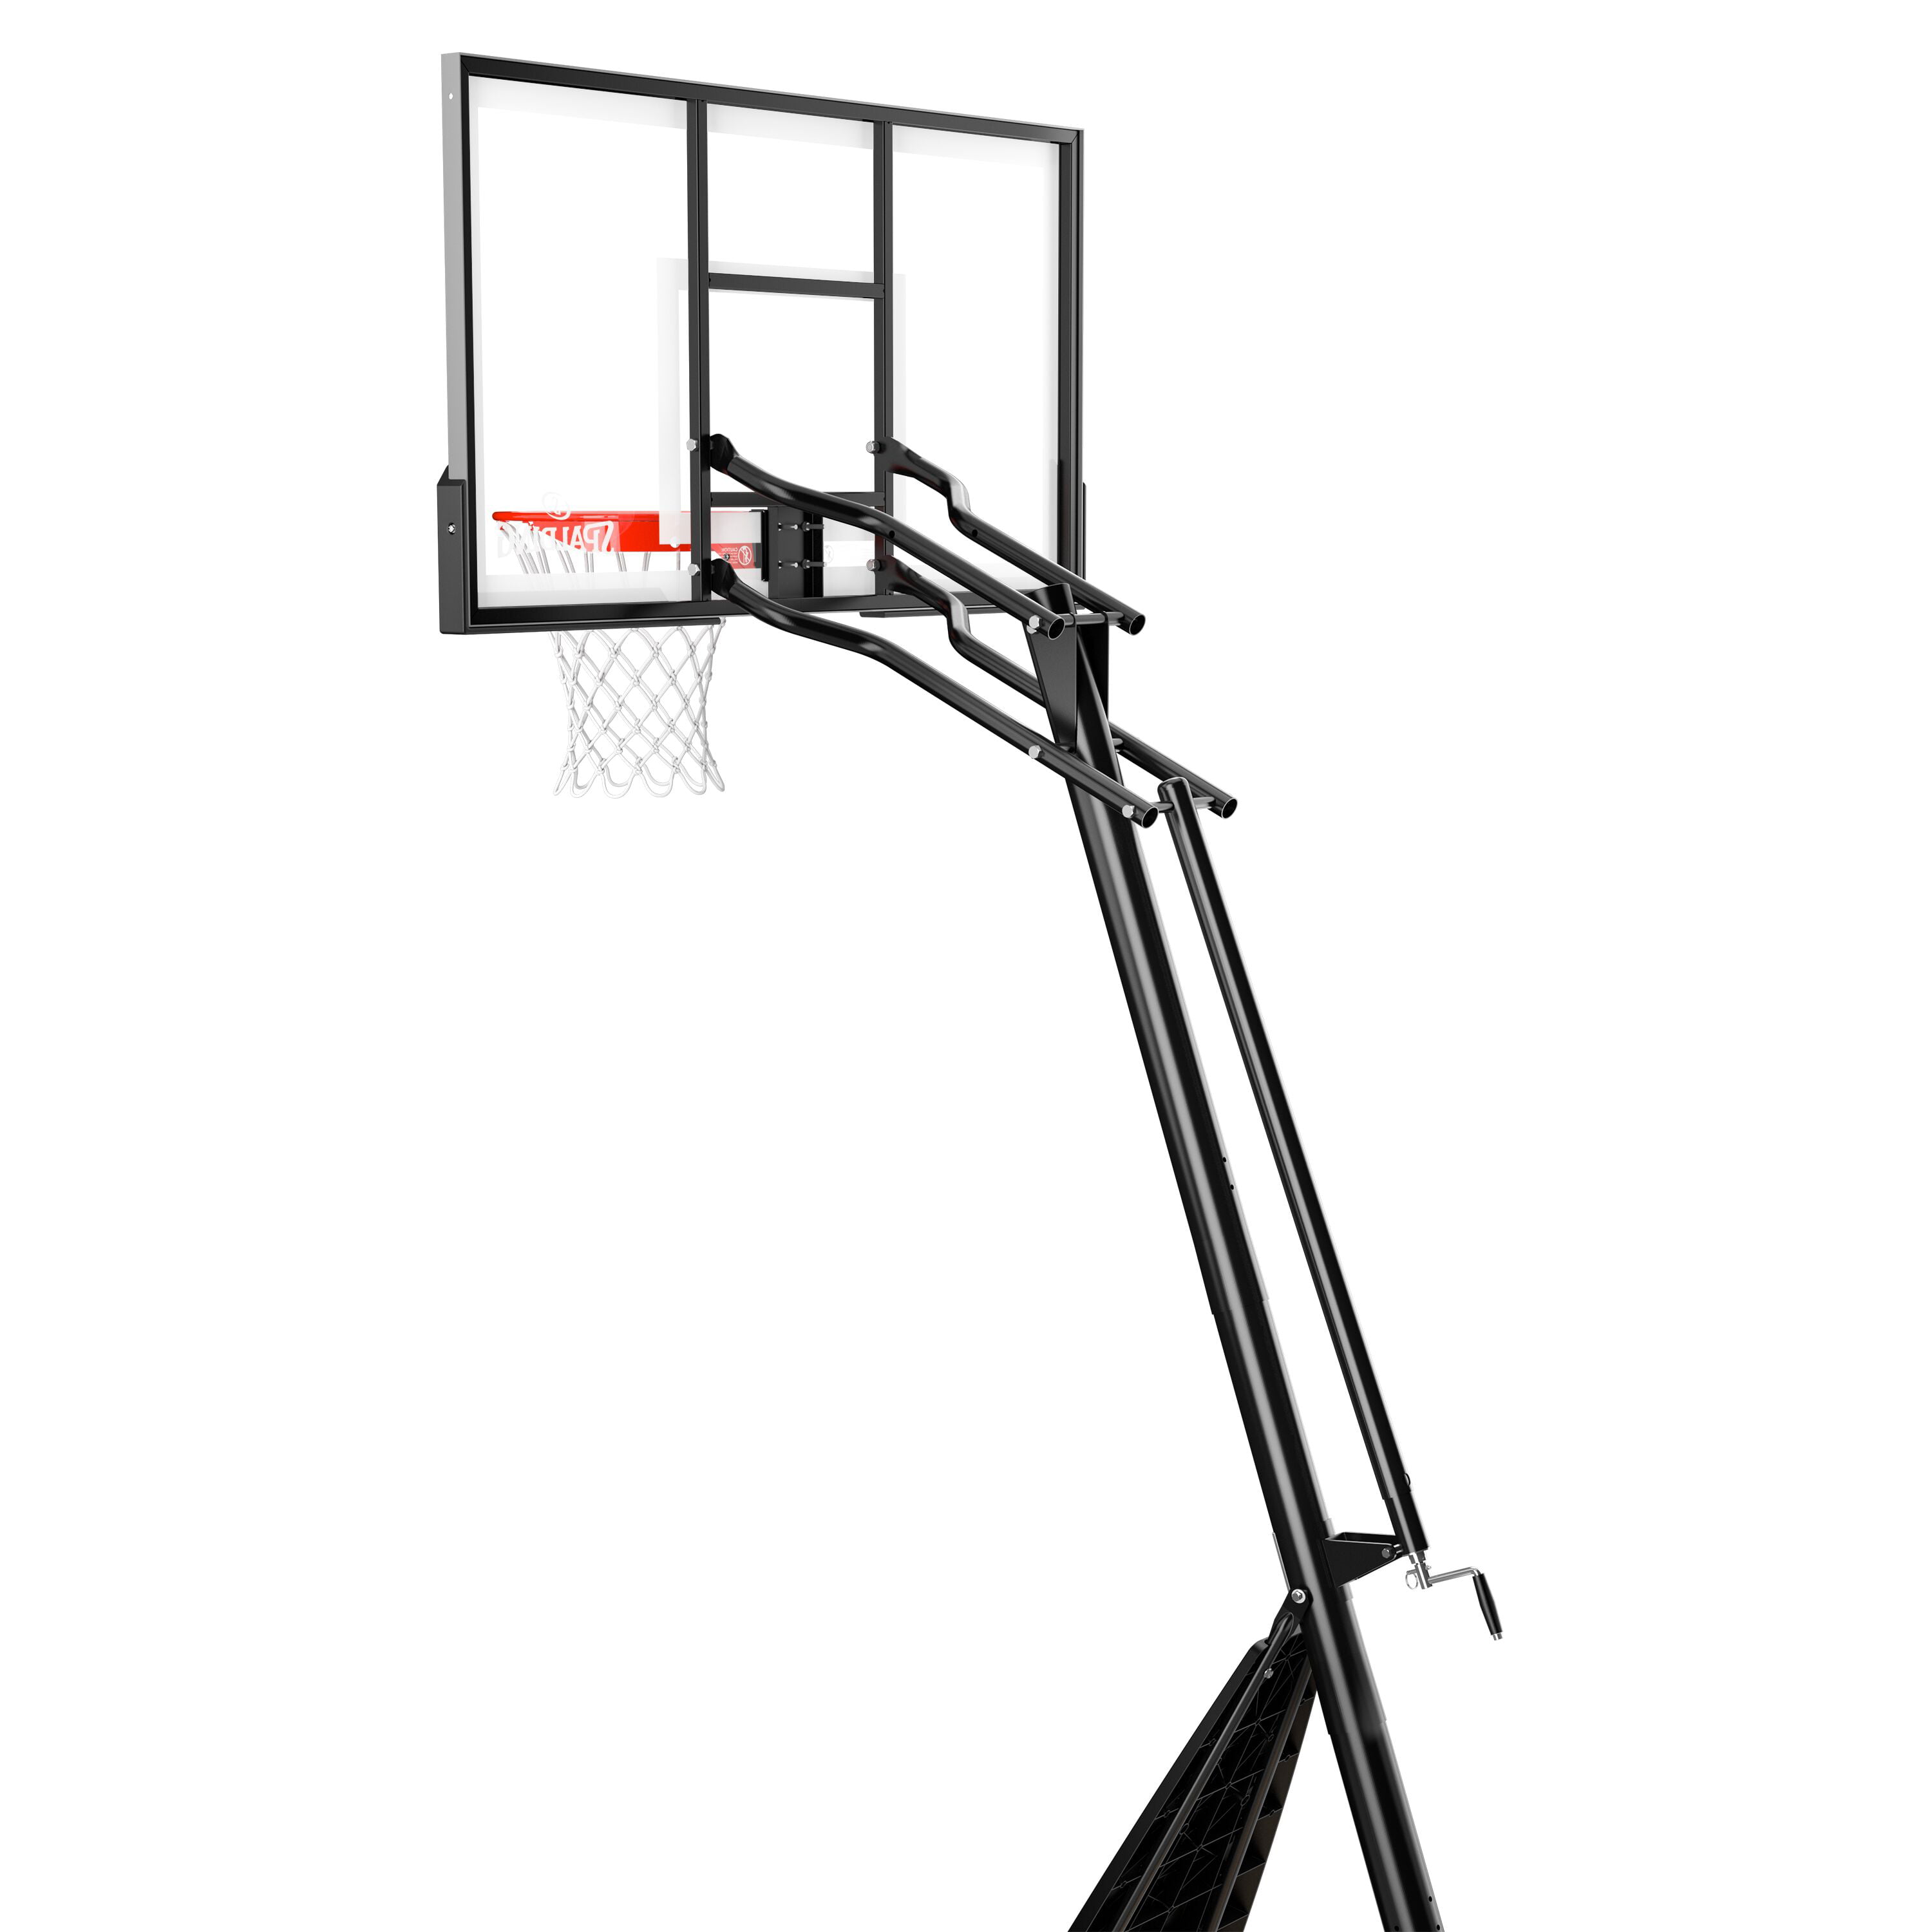 Spalding Ultimate Hybrid® Portable Basketball Hoop System l